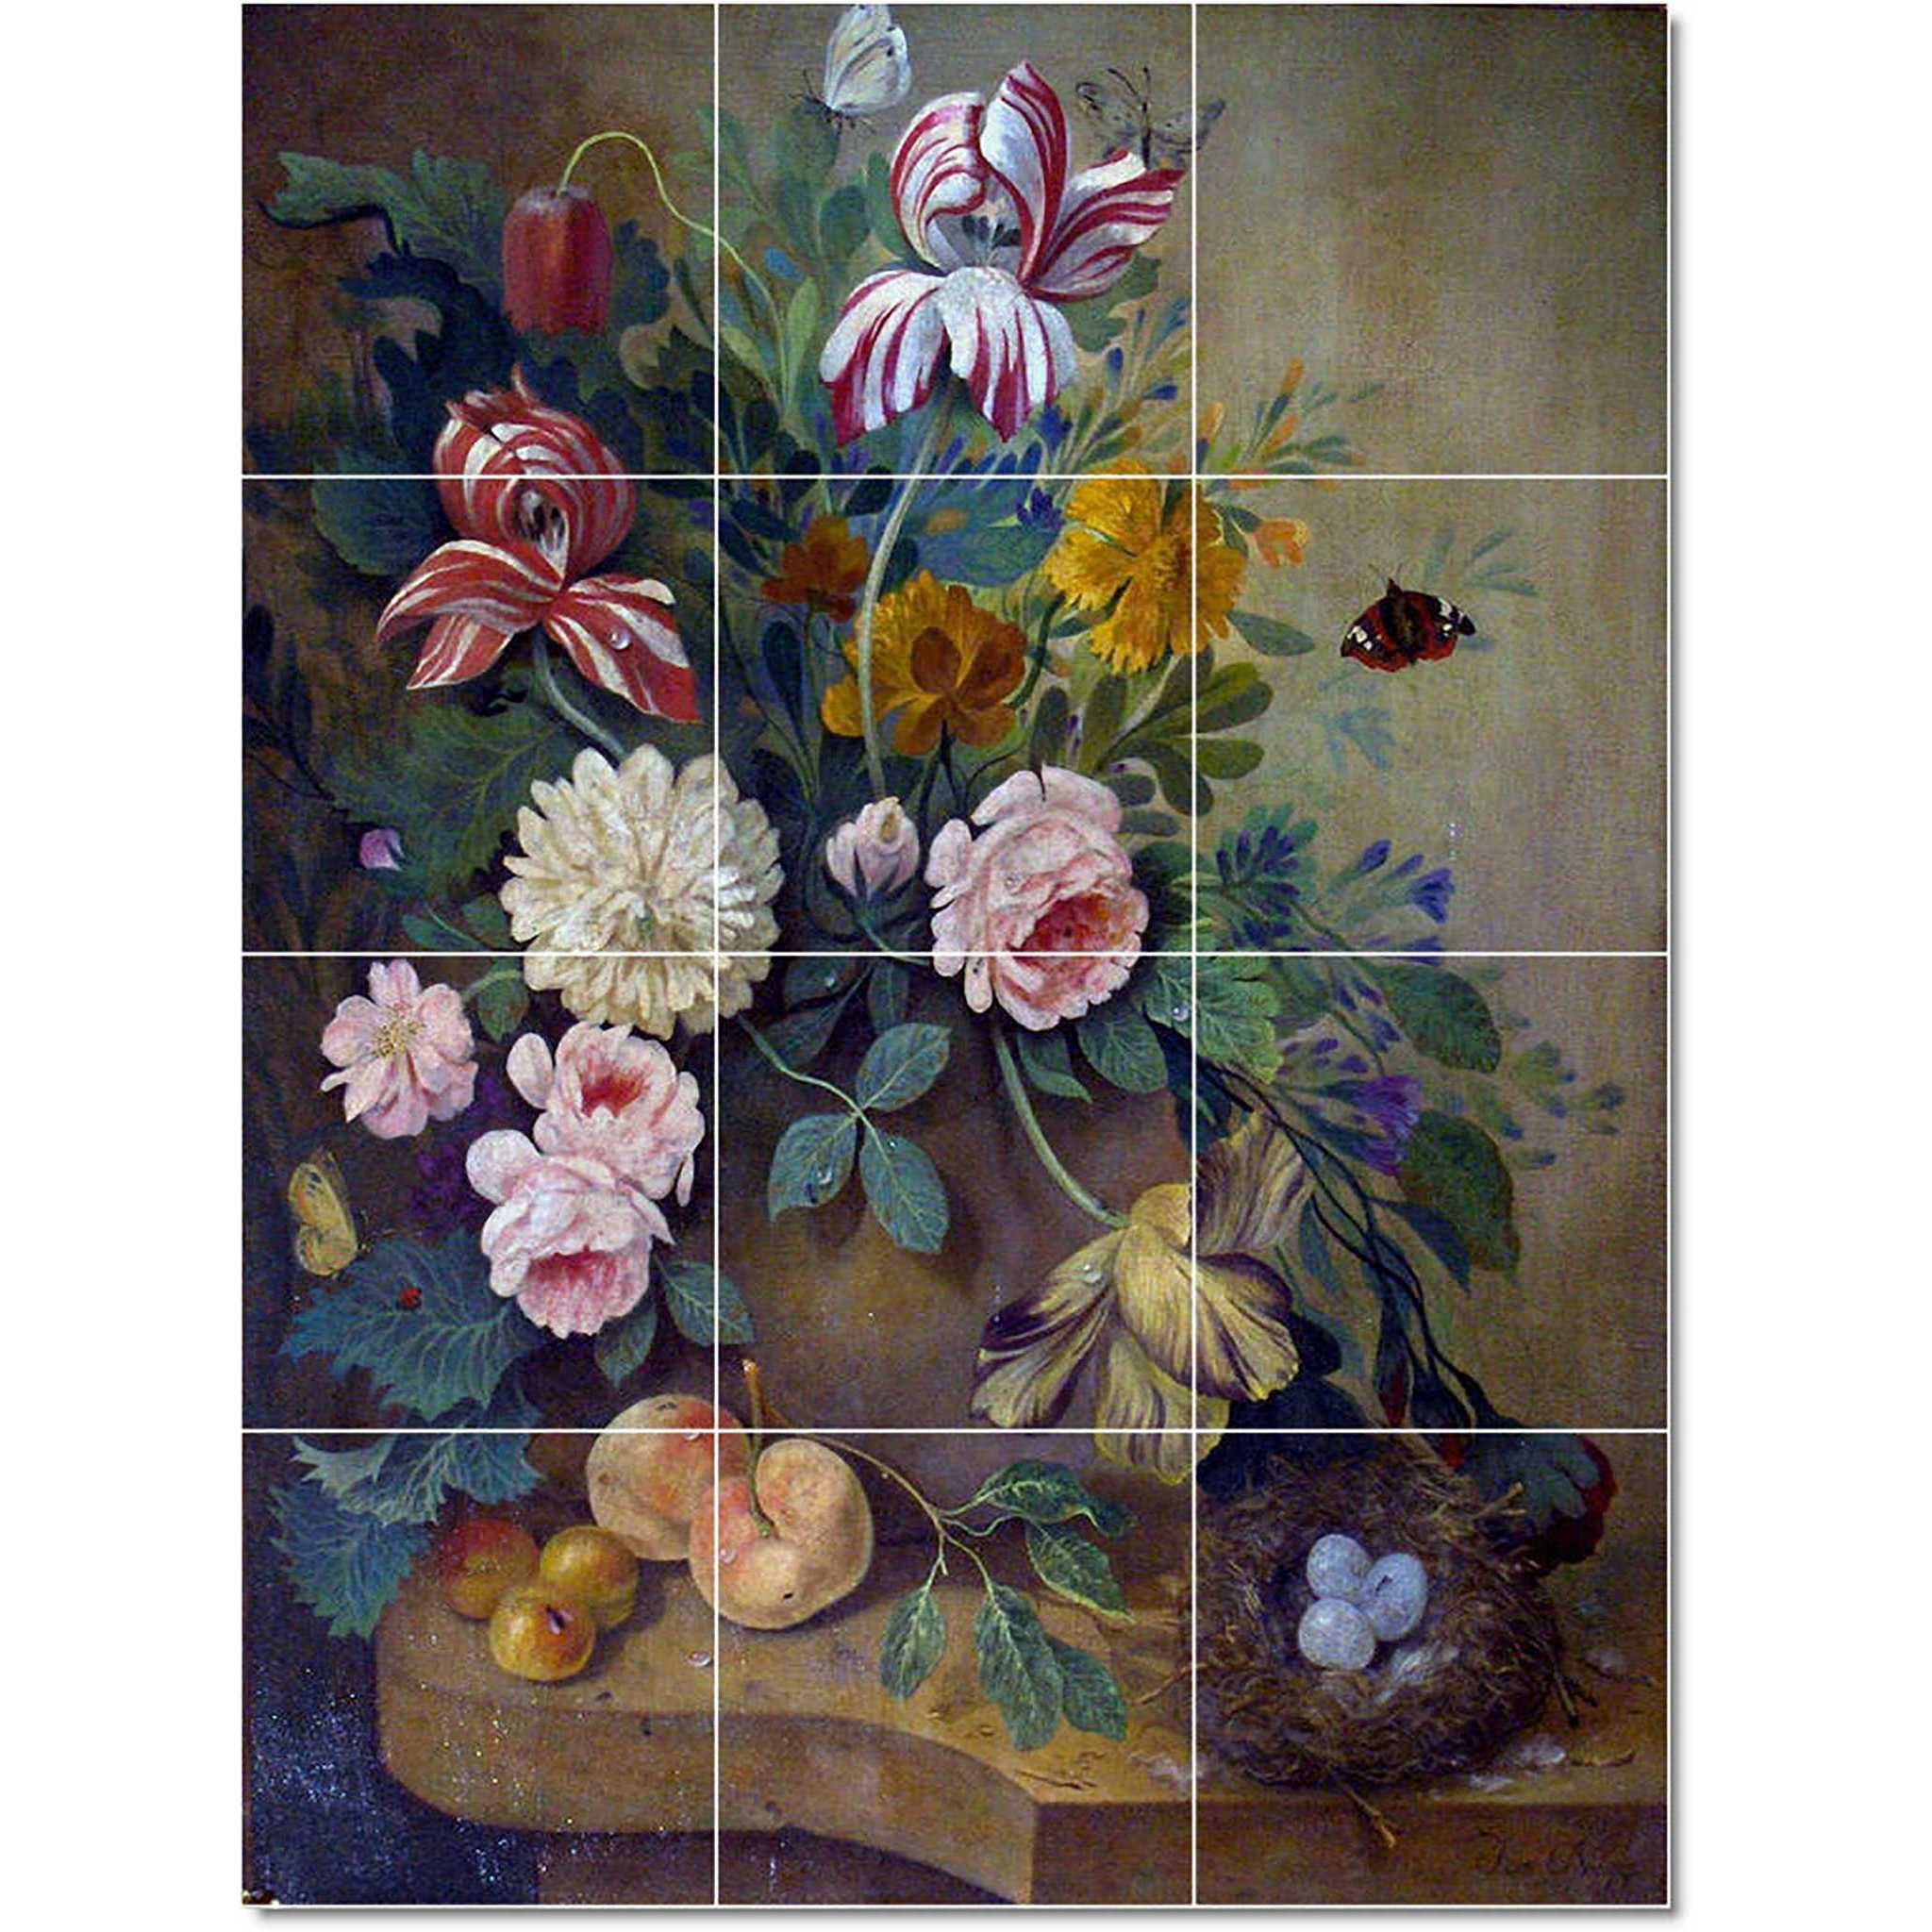 joseph nigg flower painting ceramic tile mural p22891